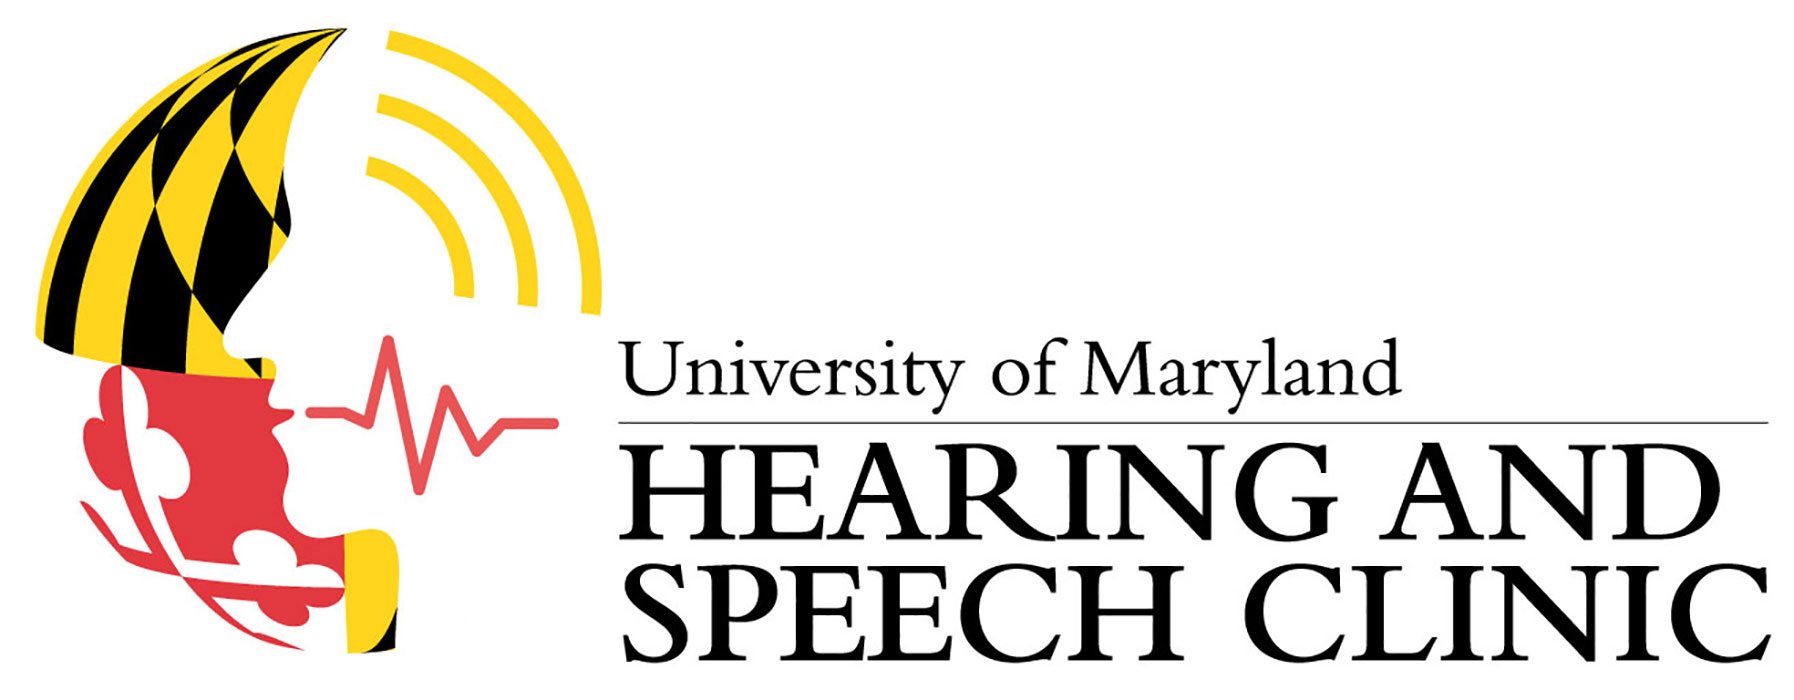 University of Maryland Hearing and Speech Clinic Logo